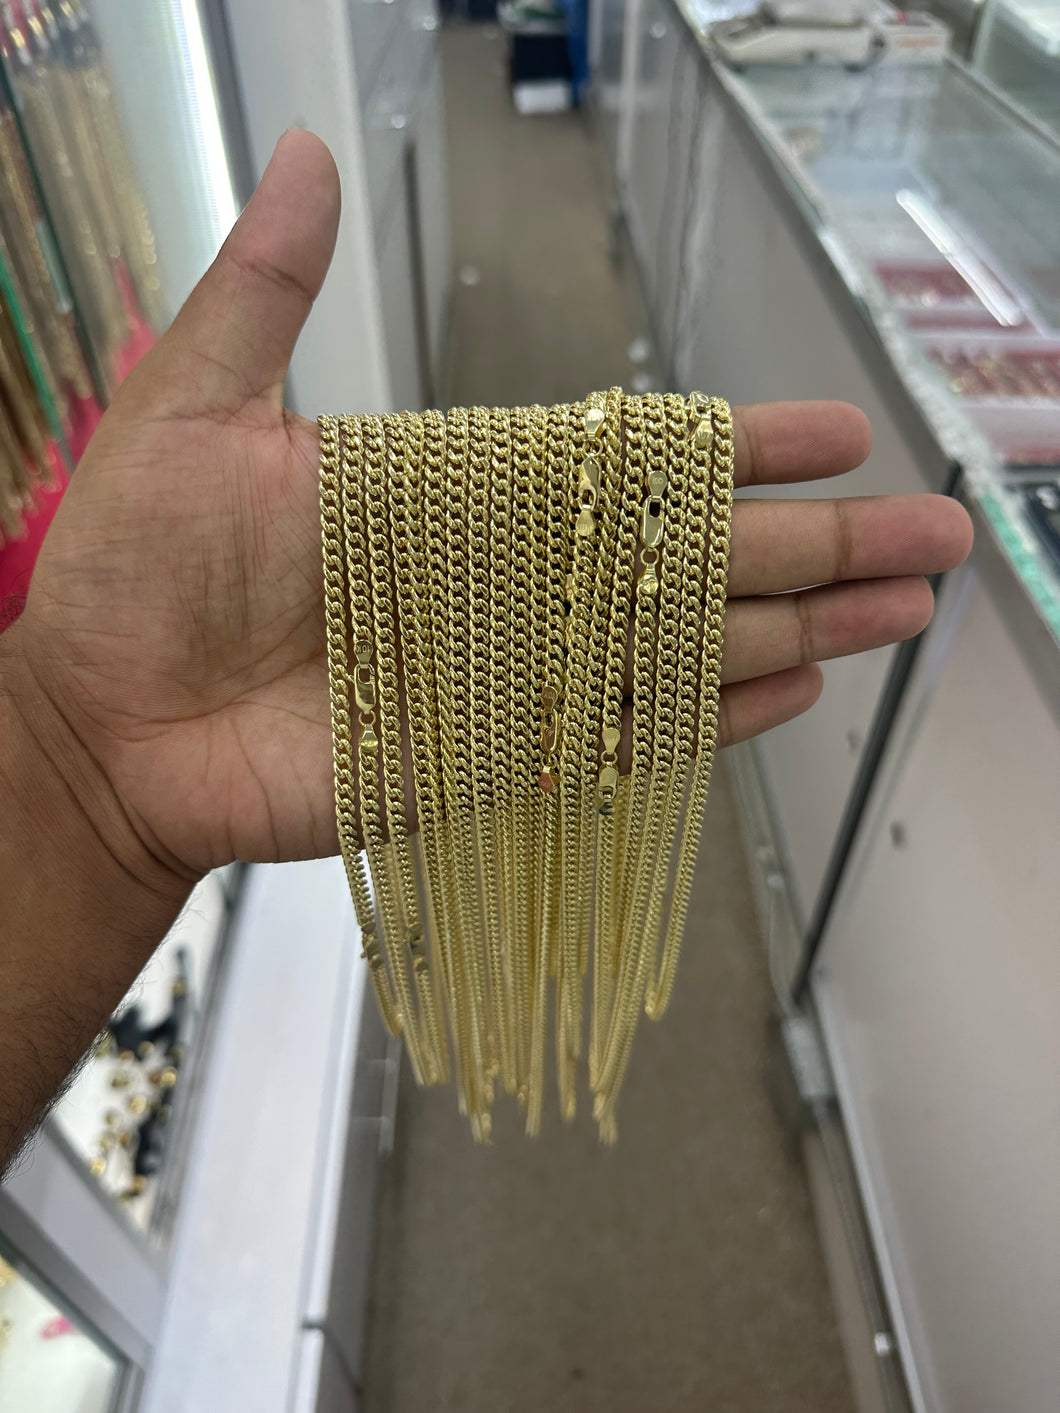 10KT 4.5MM Miami Cuban Necklace/Bracelet 8”/16”-26” Brand New